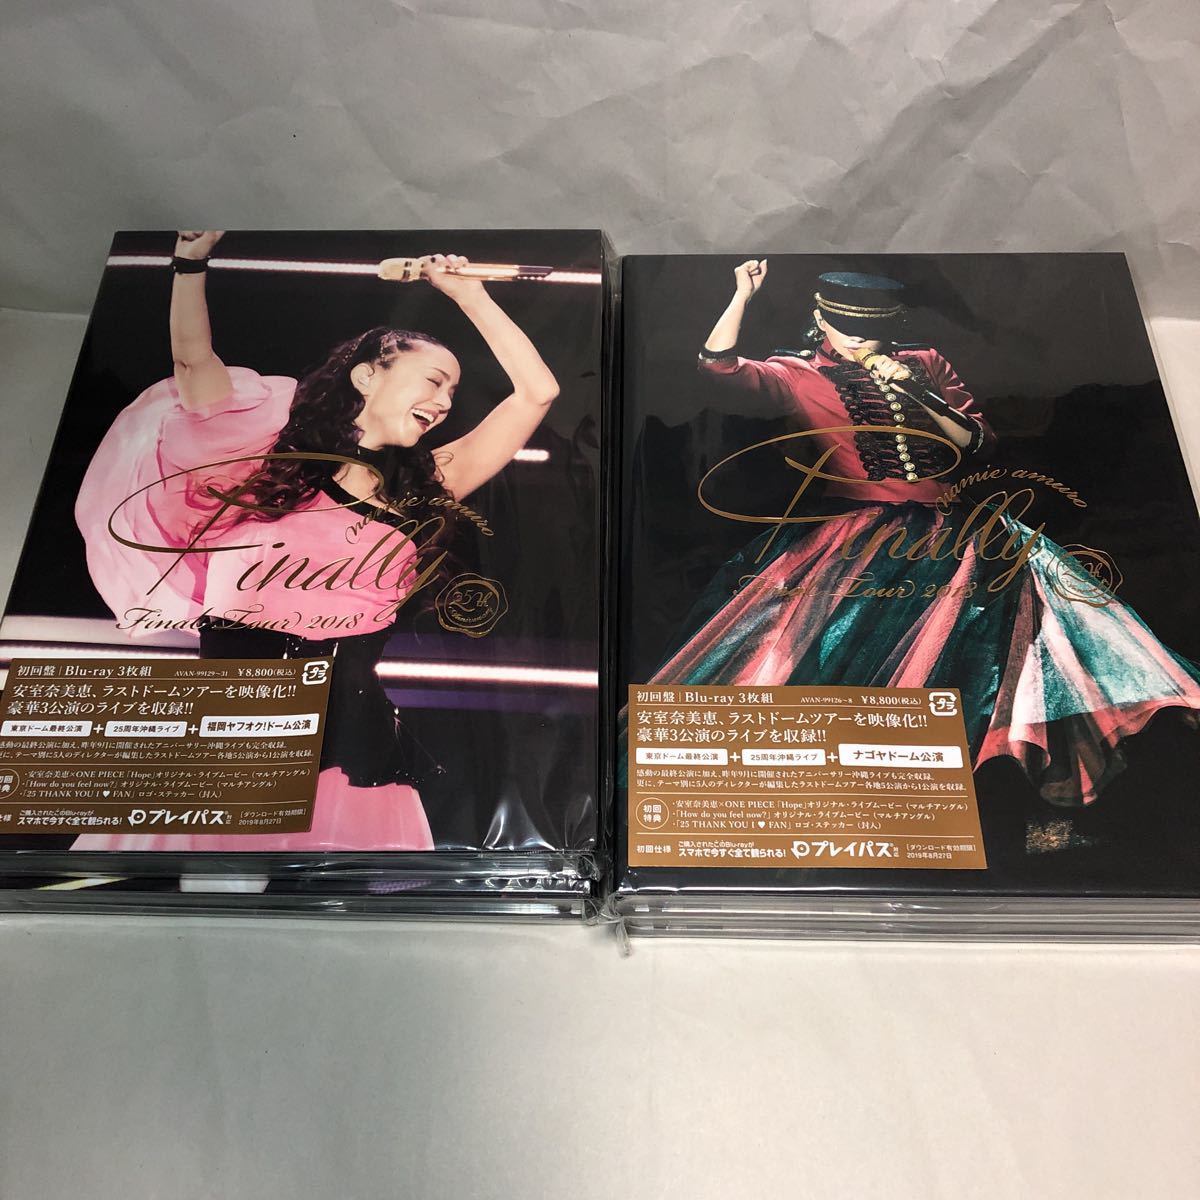 絶版 新品未開封 安室奈美恵 final tour2018 Finally 5枚セット Blu-ray 初回限定盤 HMV限定バッヂ12種付き